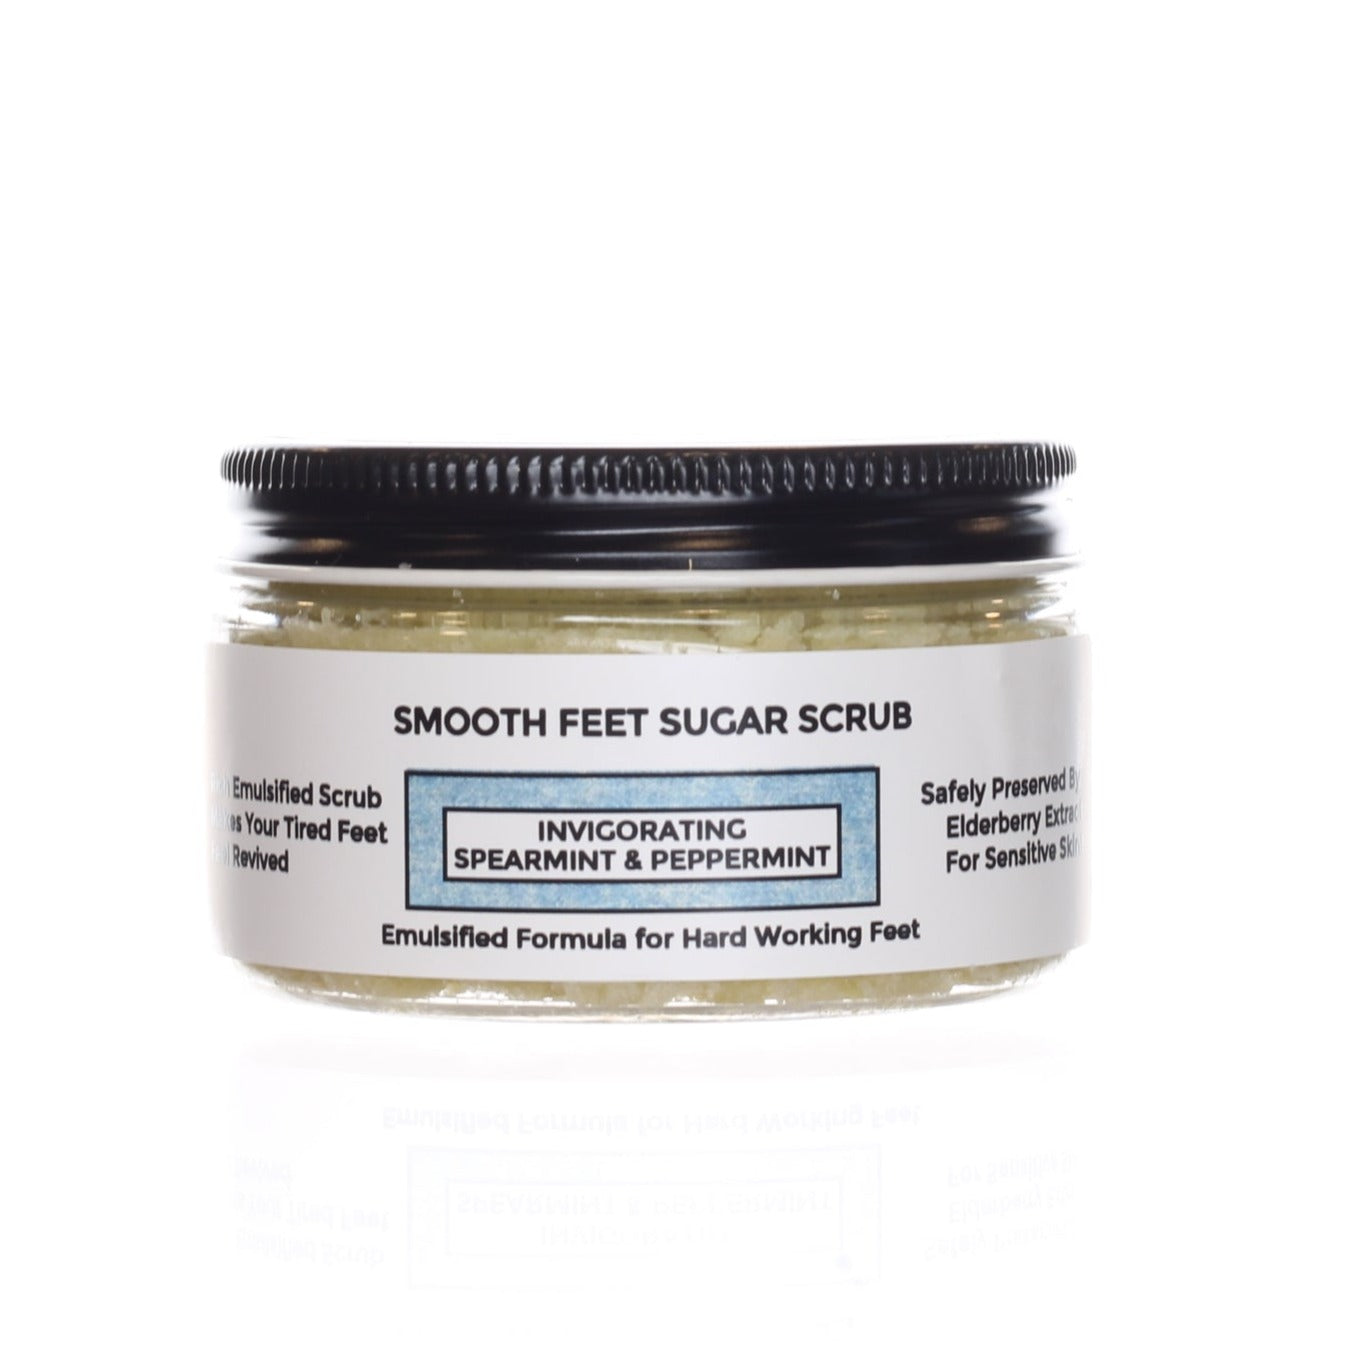 Farmbody Smooth Feet Sugar Scrub Vegan Formula for hardworking feet to smooth dry skin and exfoliate calluses